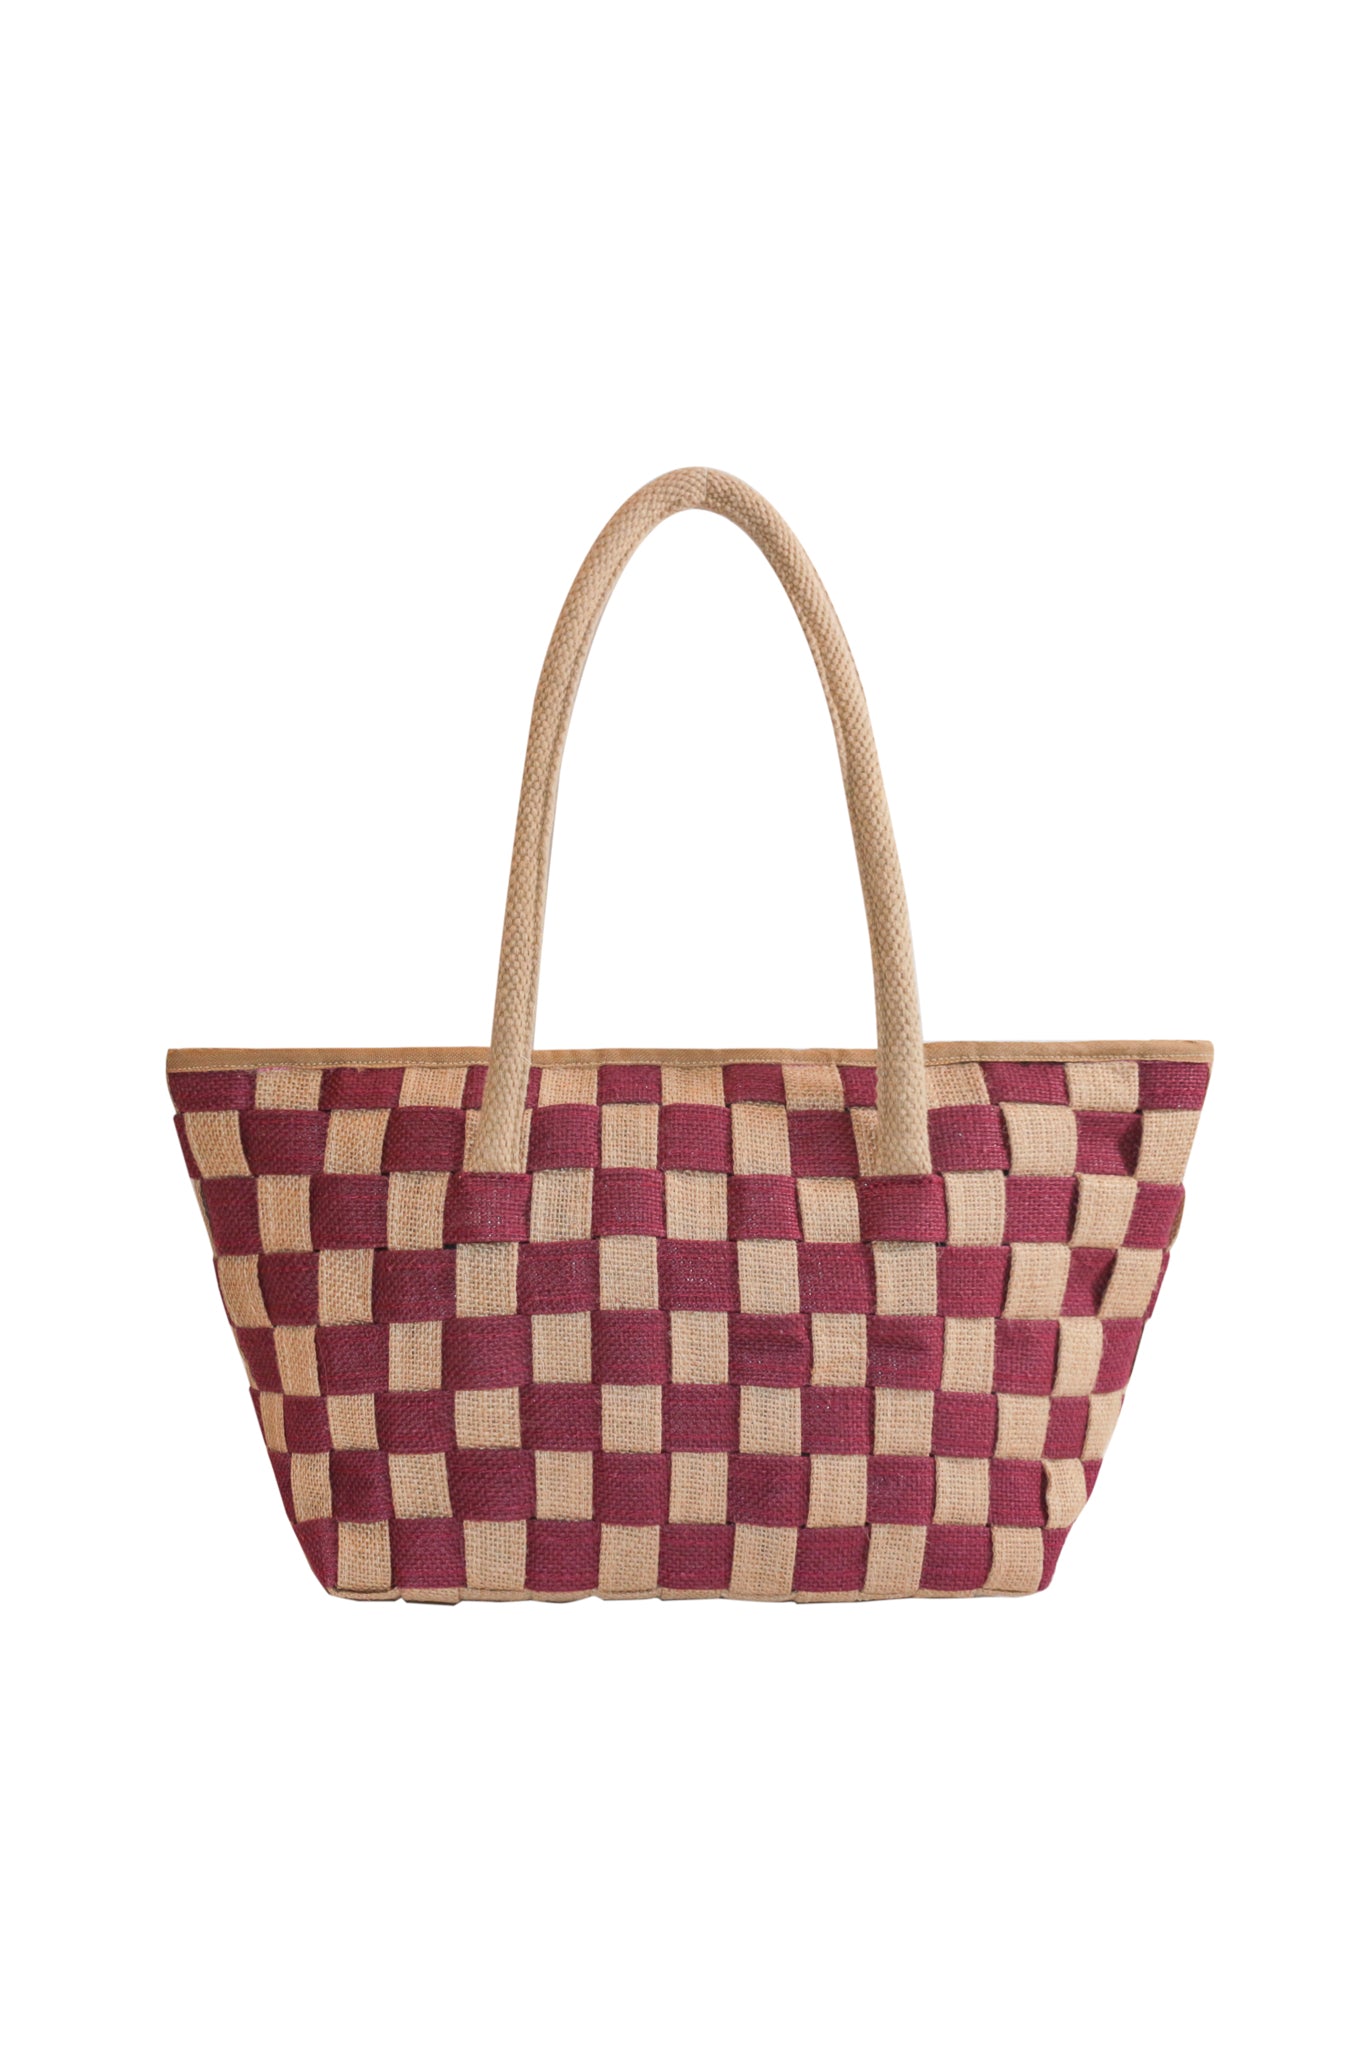 Classic Checkered Handwoven Vegan Jute Handbag in Burgundy